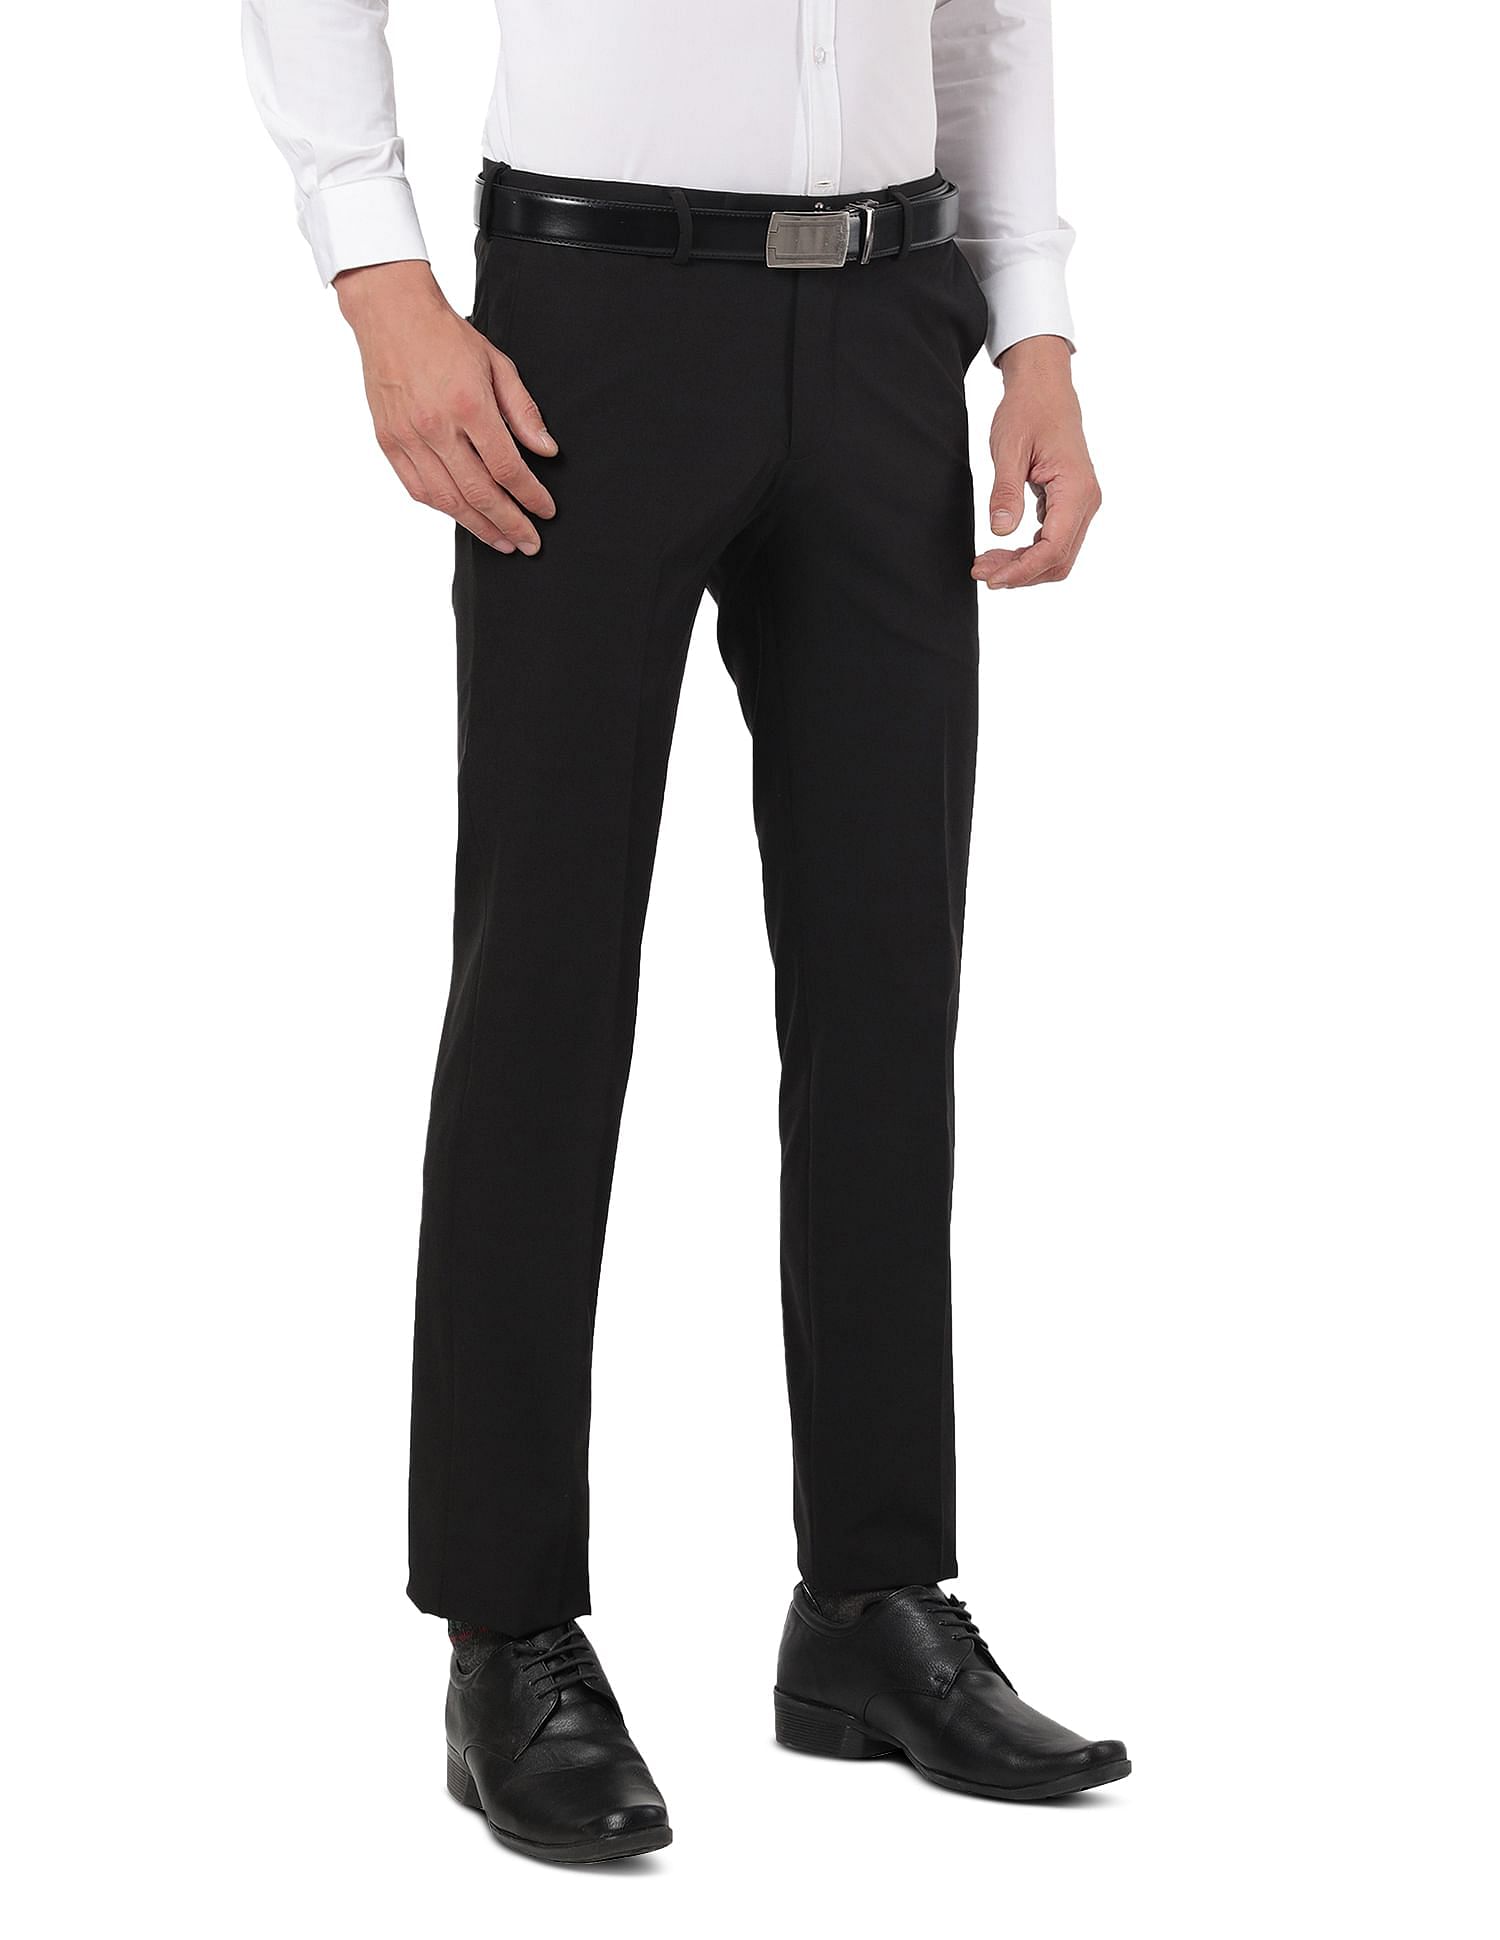 Buy Men Black Solid Slim Fit Formal Trousers Online  668863  Peter England